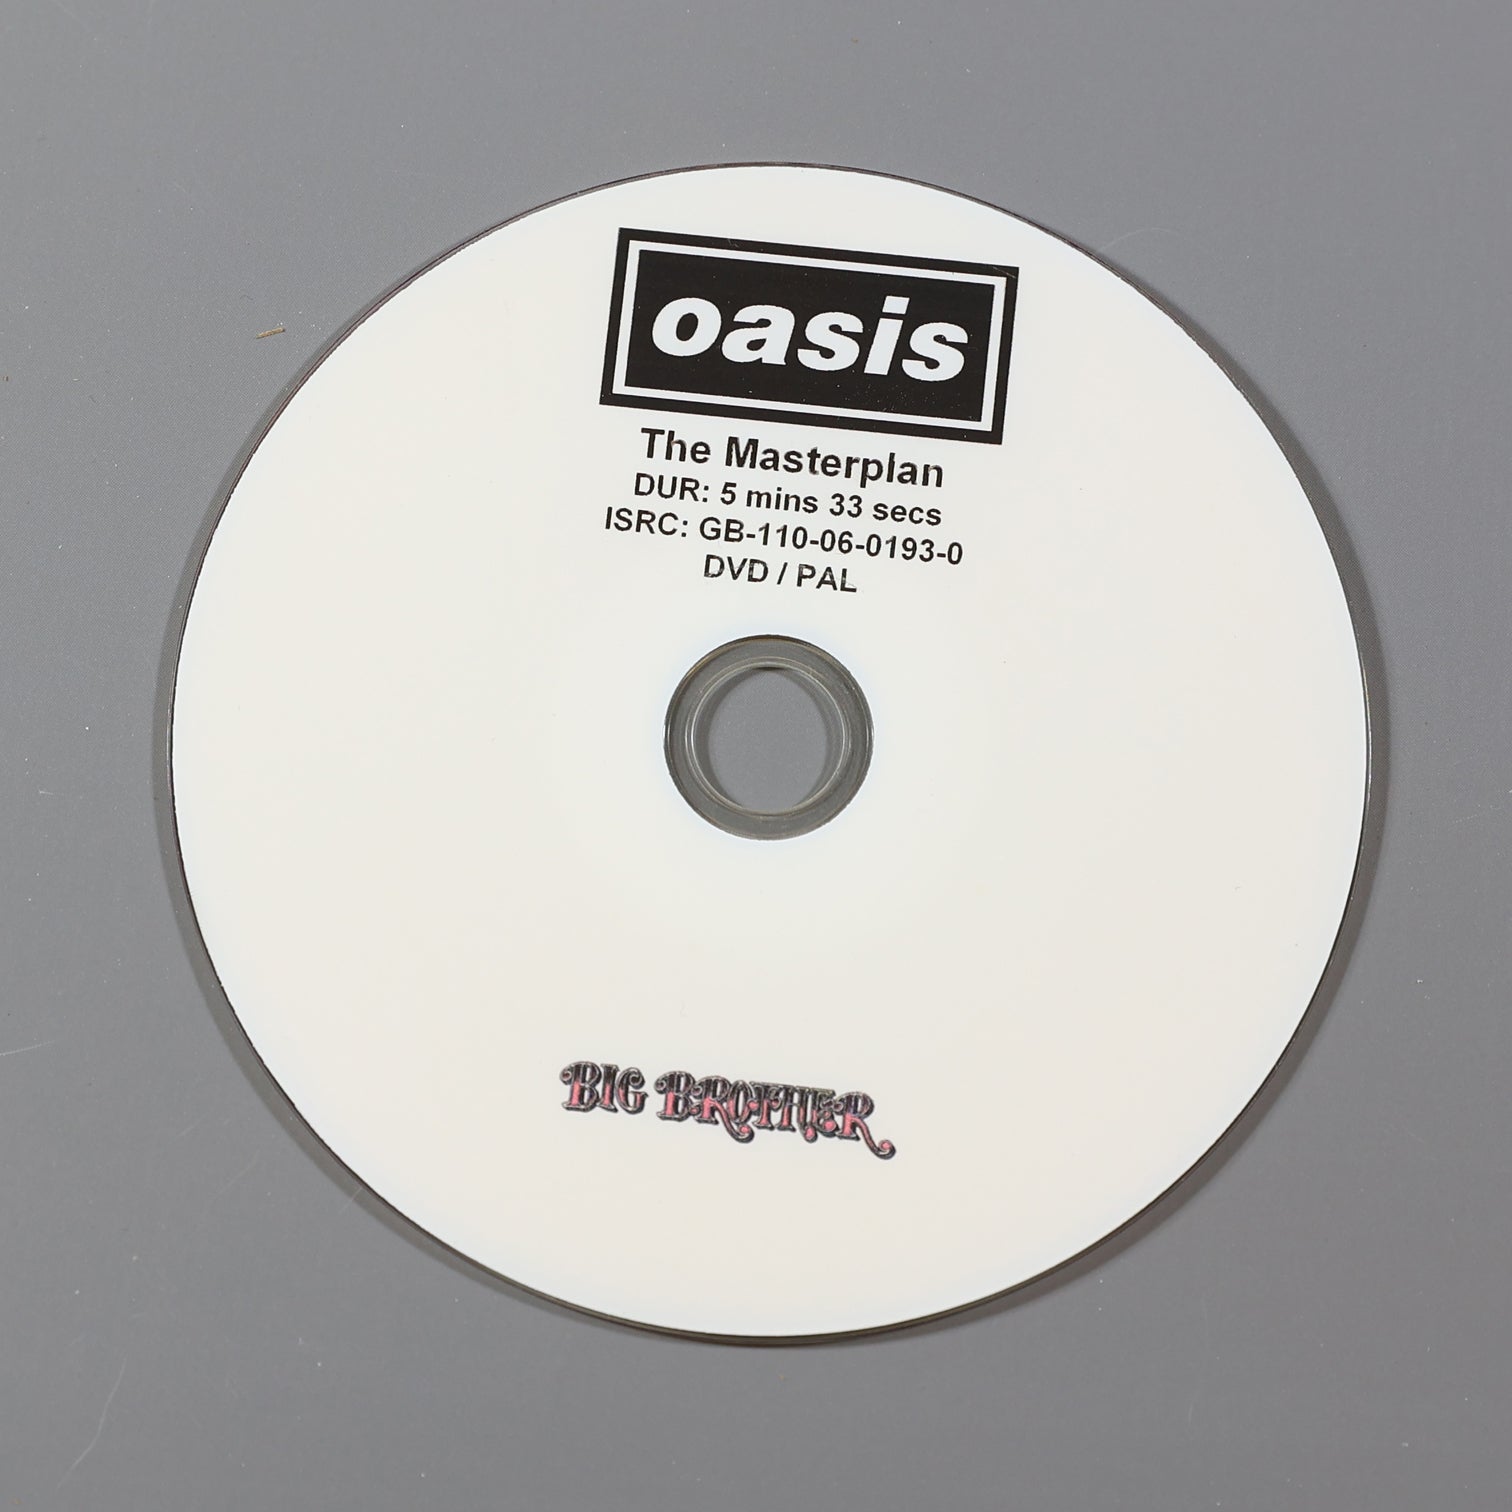 Oasis - Masterplan Promo DVD - New Item